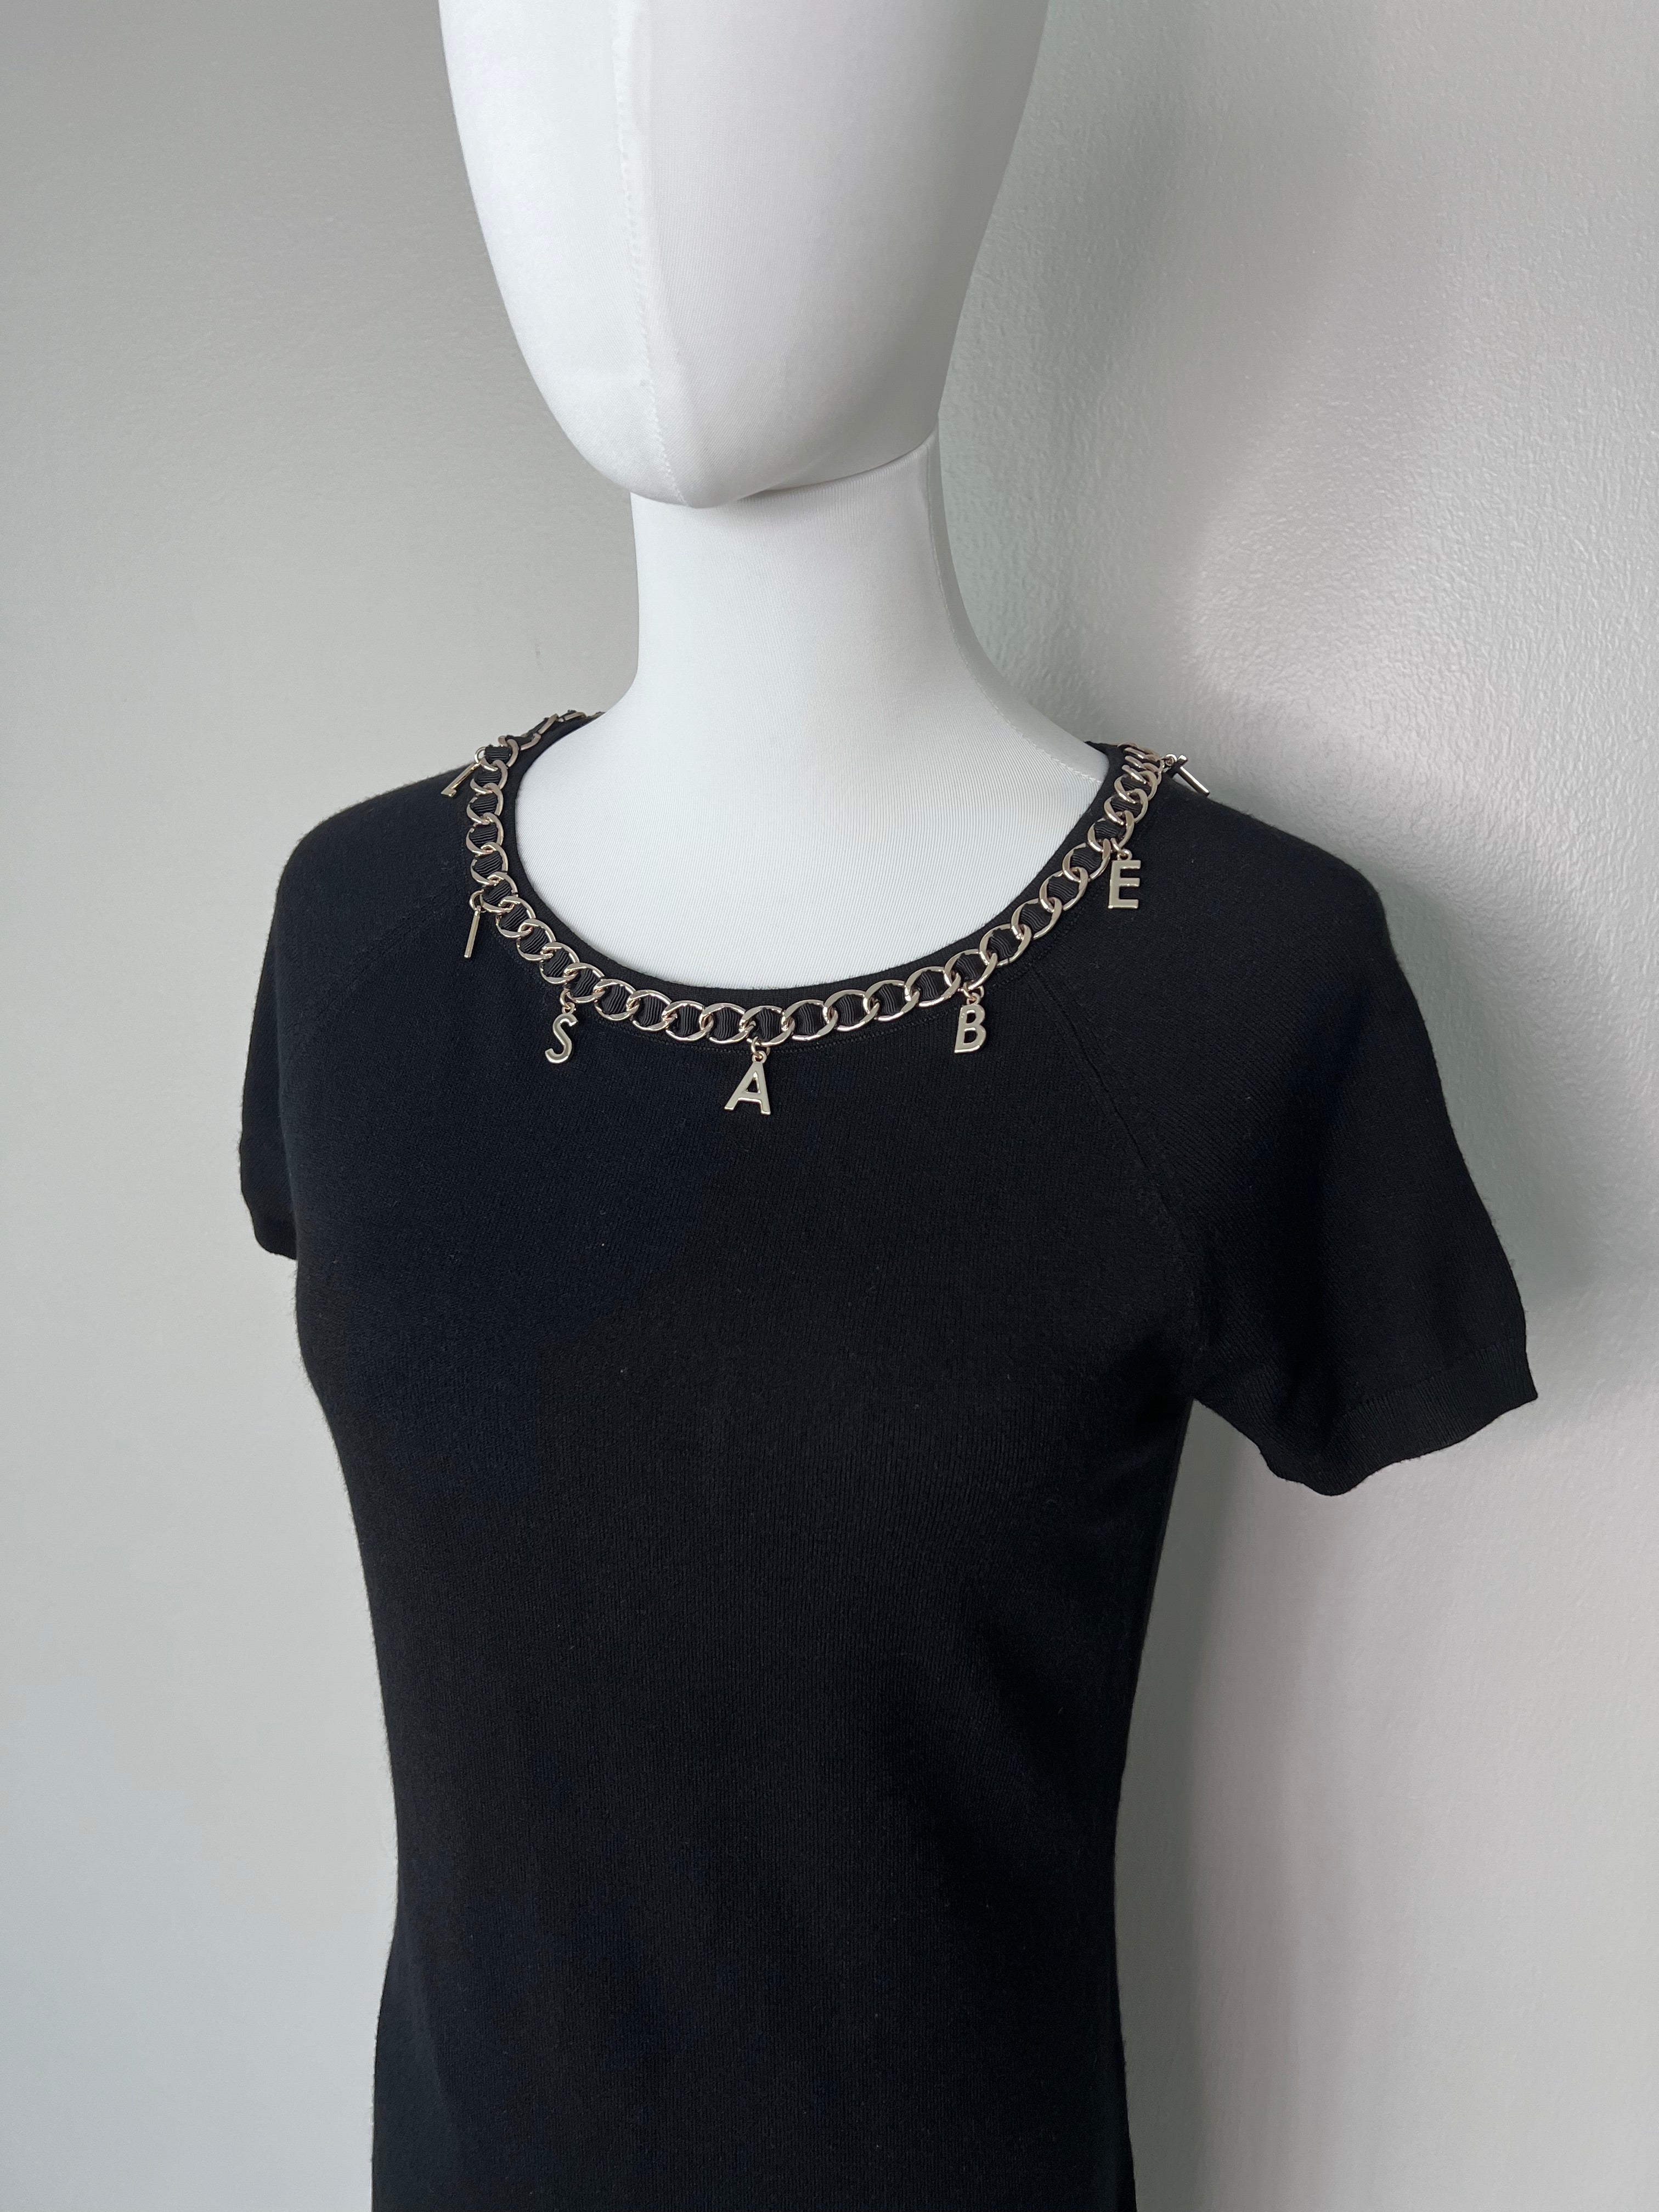 Brand new short black knitted t-shirt dress with gold hardware around the neckline. - ELISABETTA FRANCHI